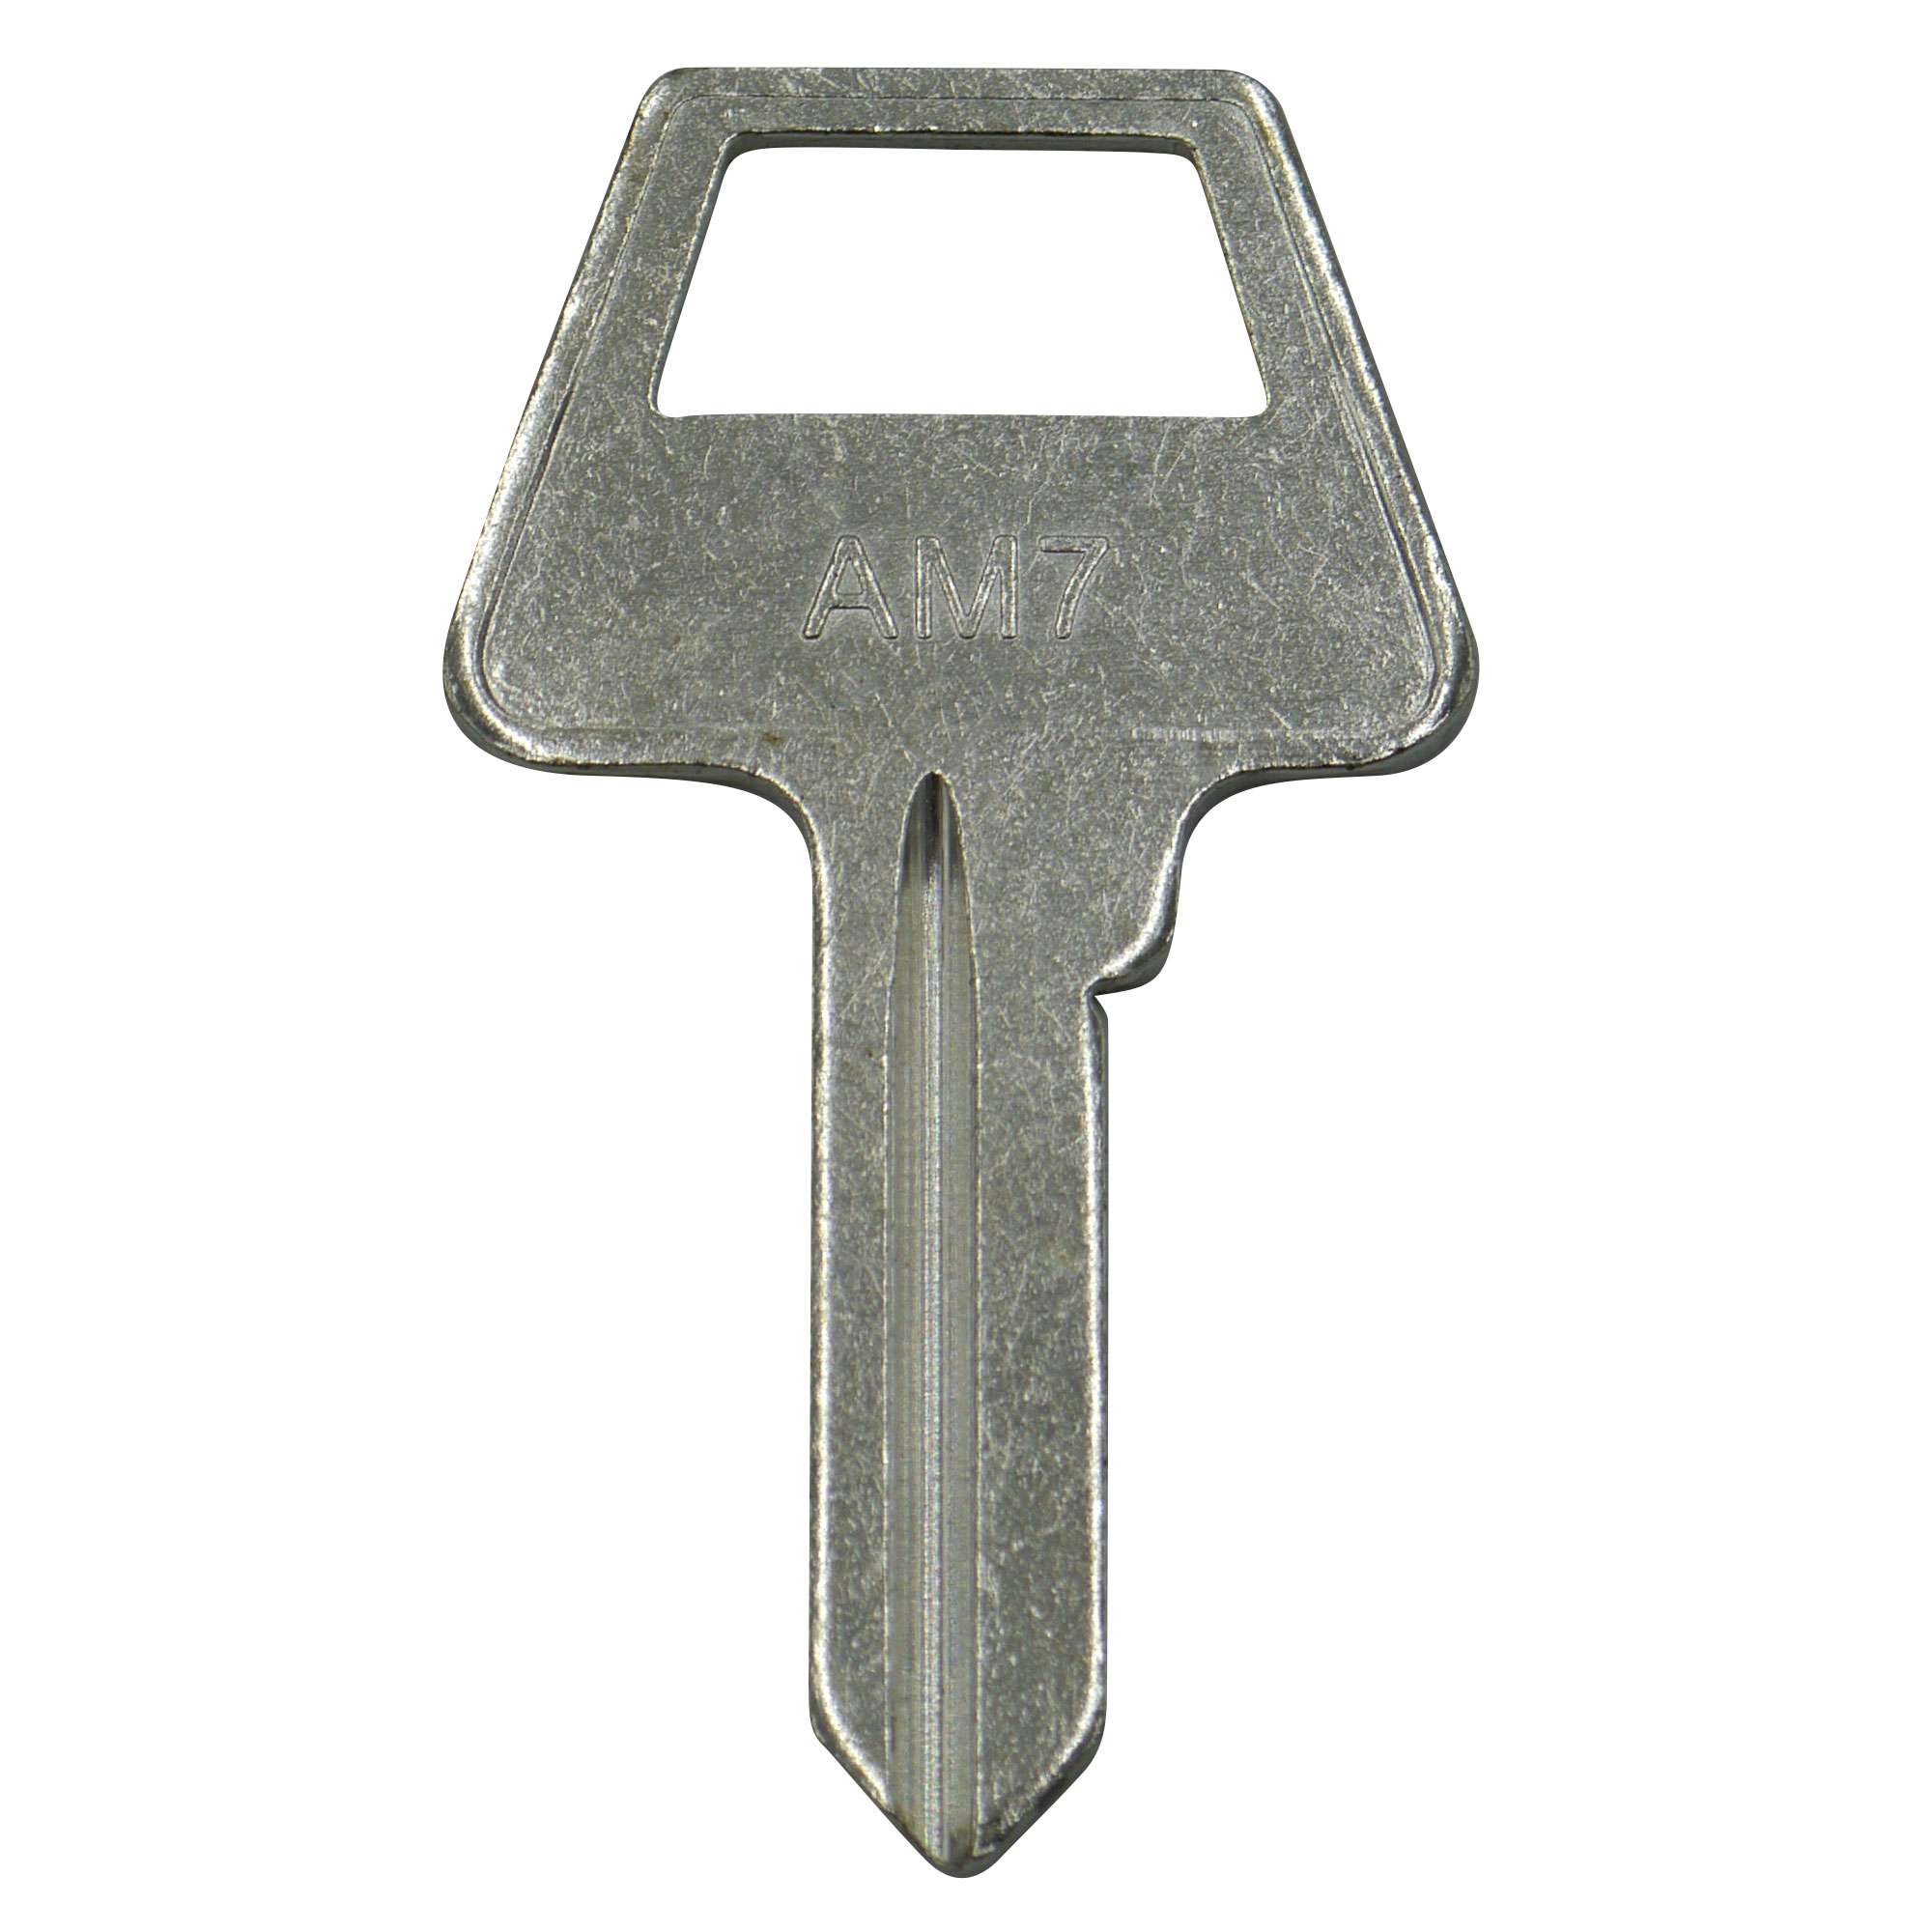 AM7 Nickel Plated Blank Key, 100/Pack - 1